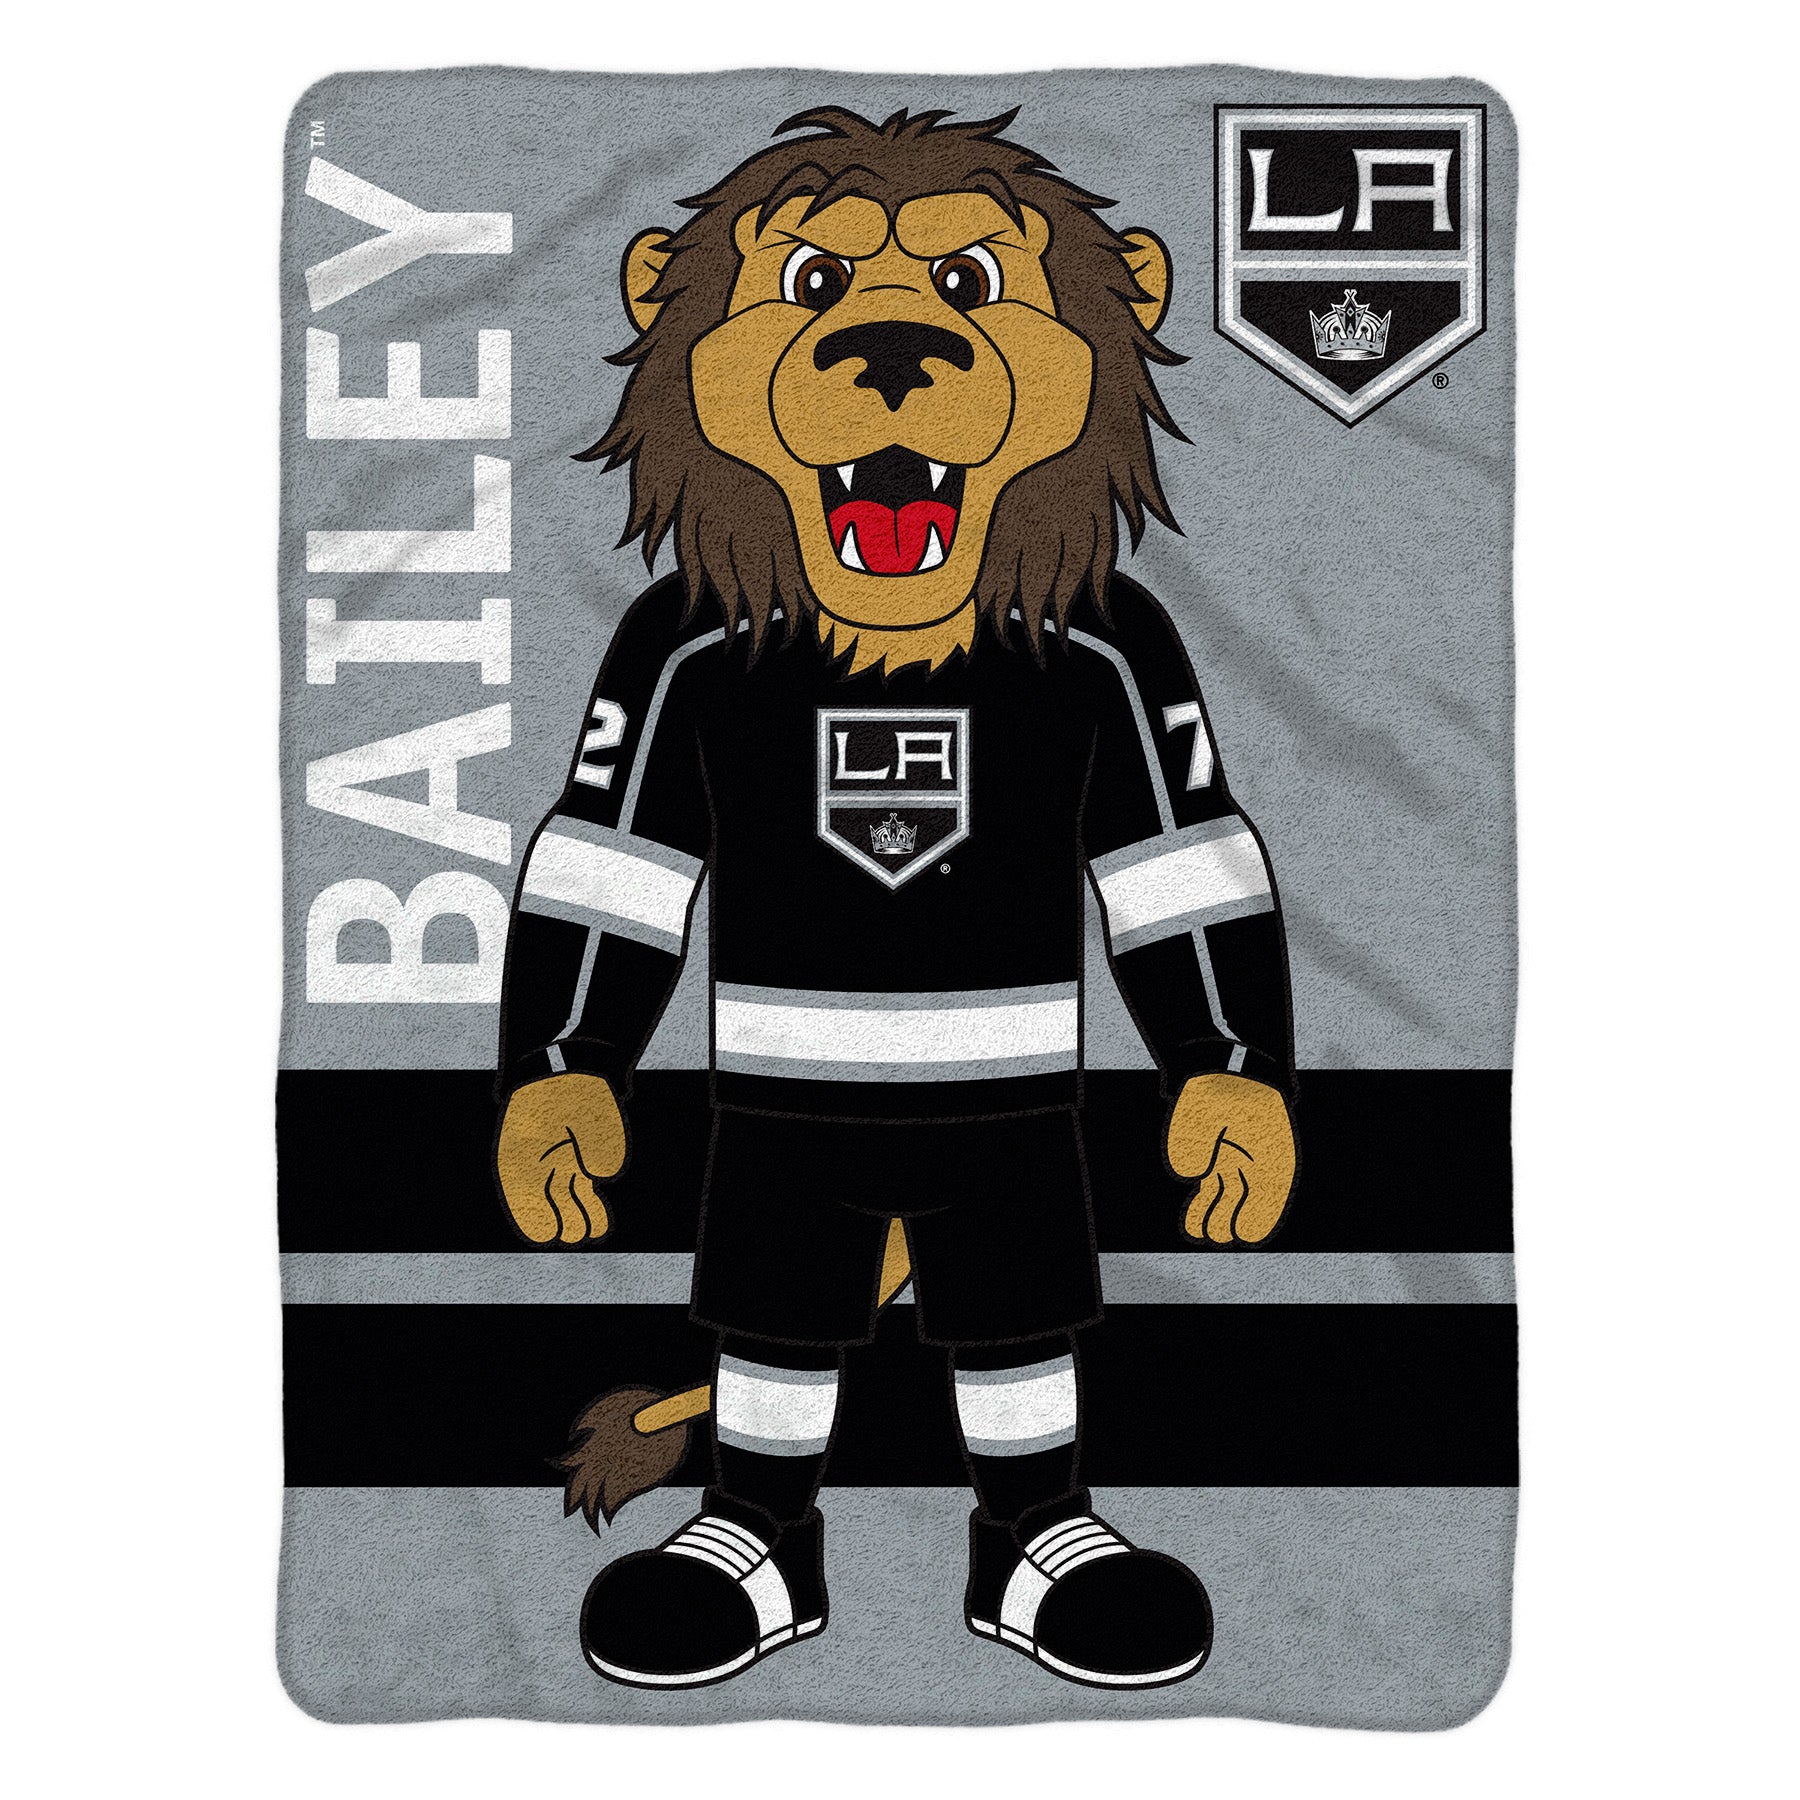 1 Bailey La Kings Mascot Images, Stock Photos & Vectors